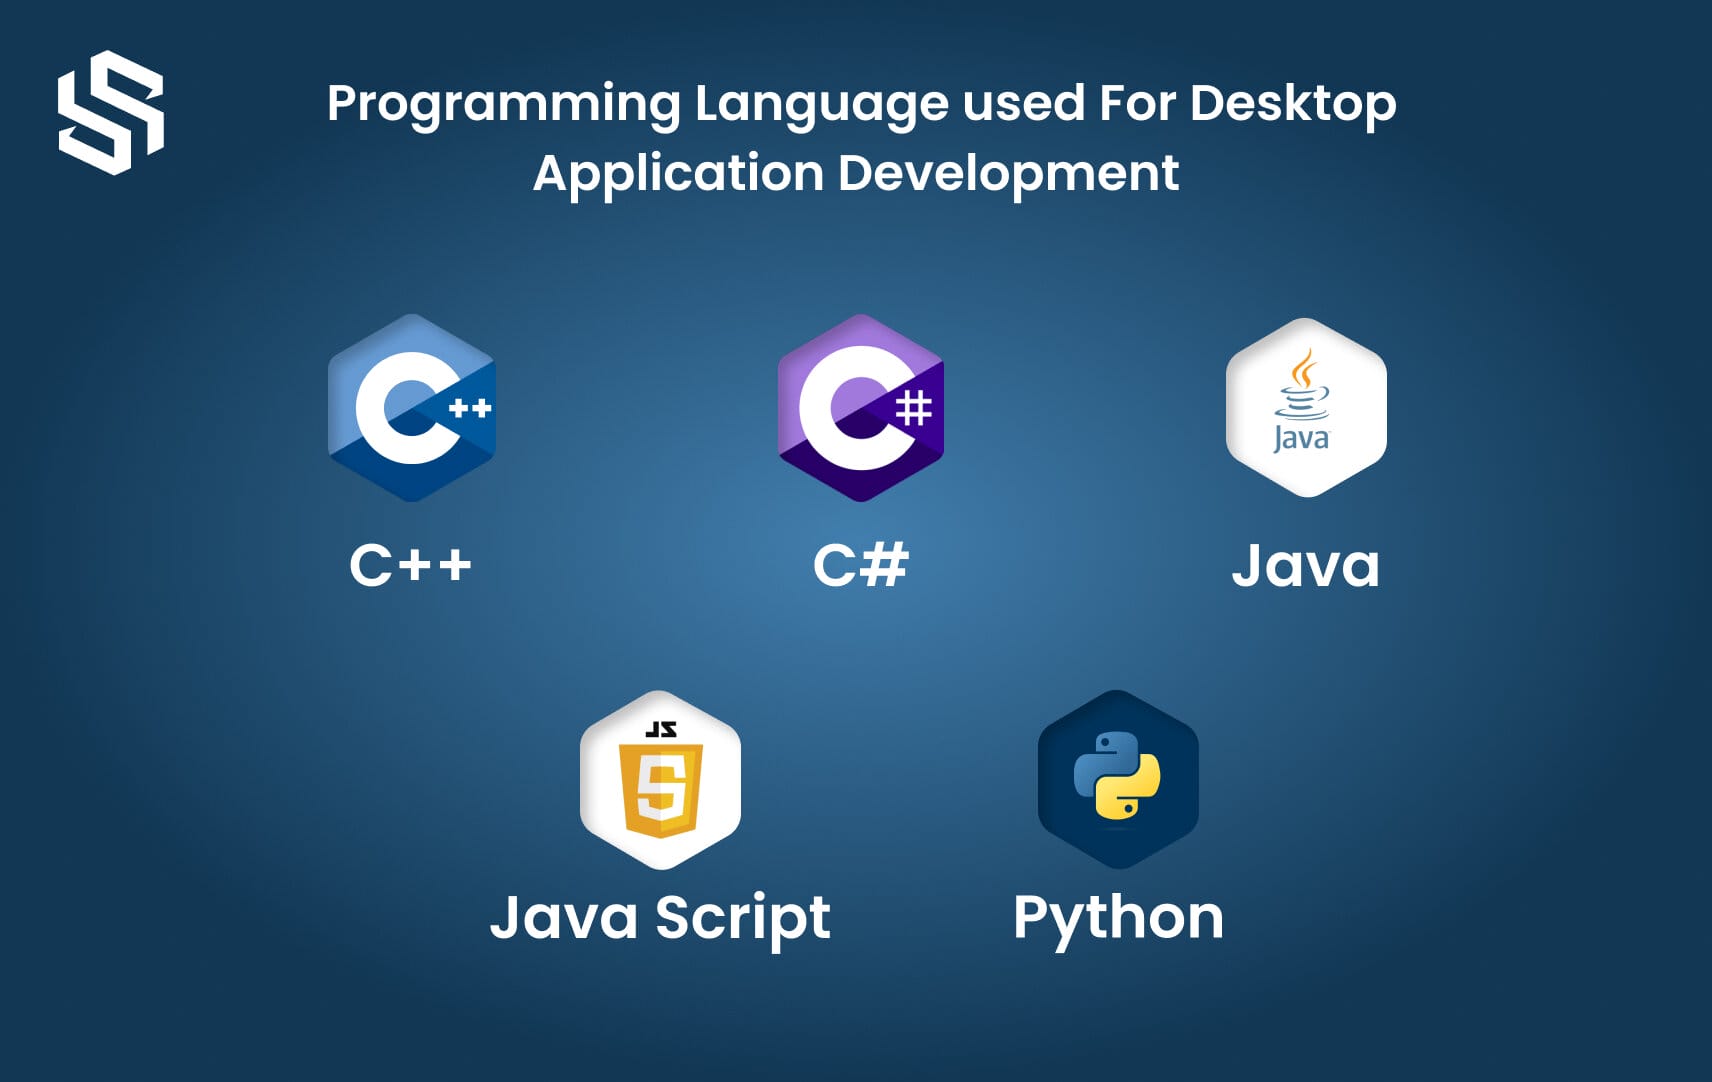 Programming Language used for Desktop Application Development